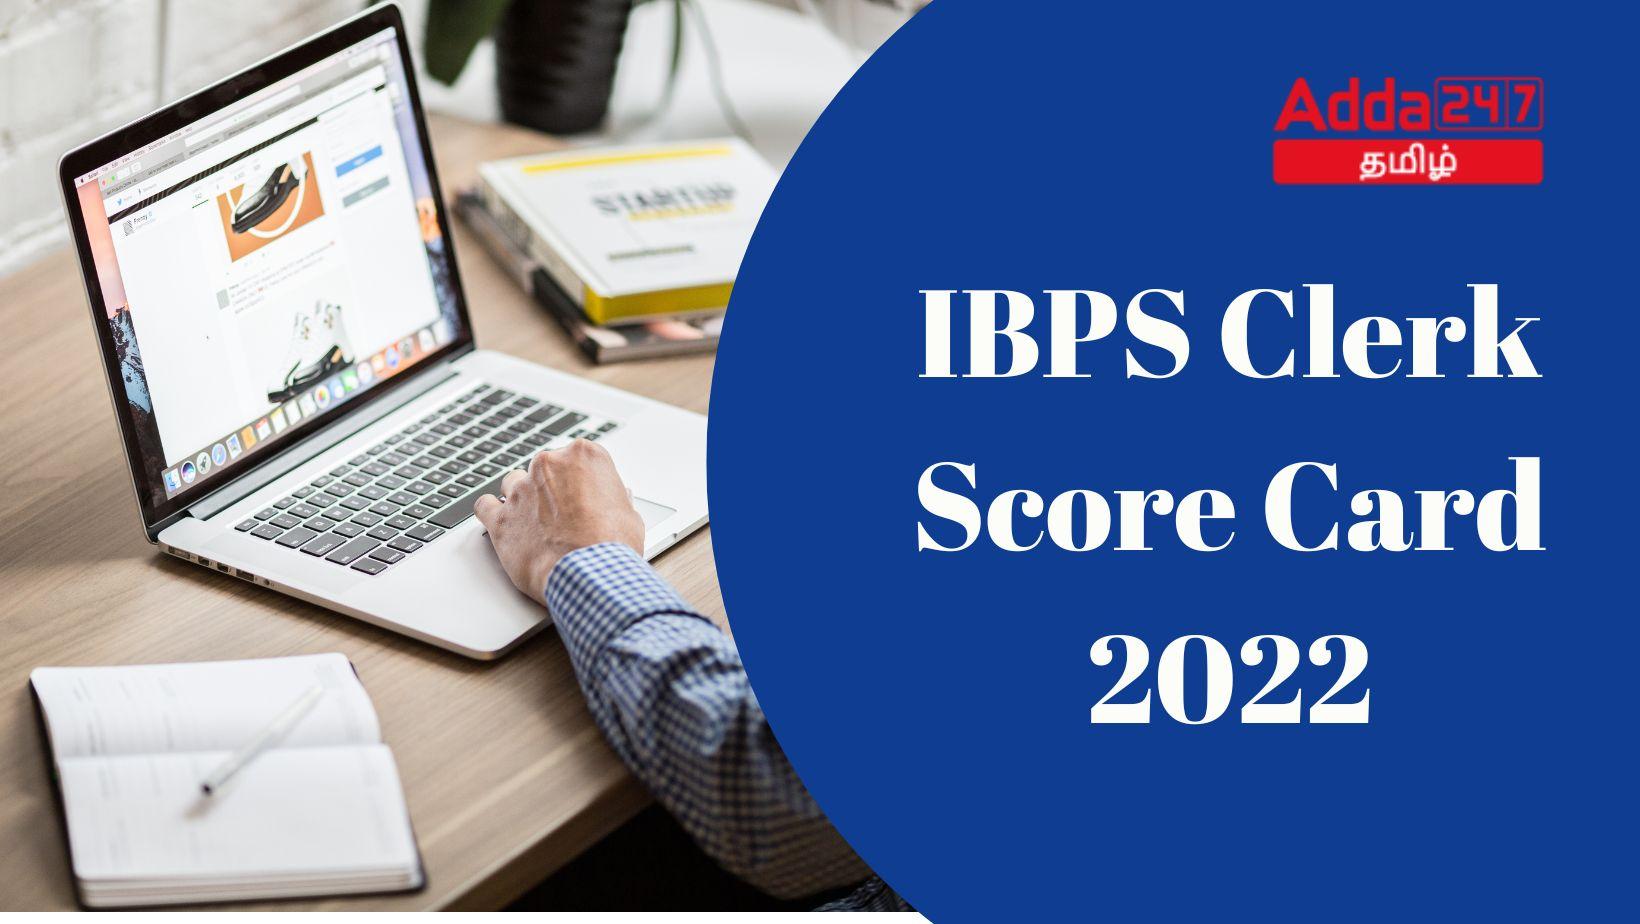 IBPS Clerk Score Card 2022